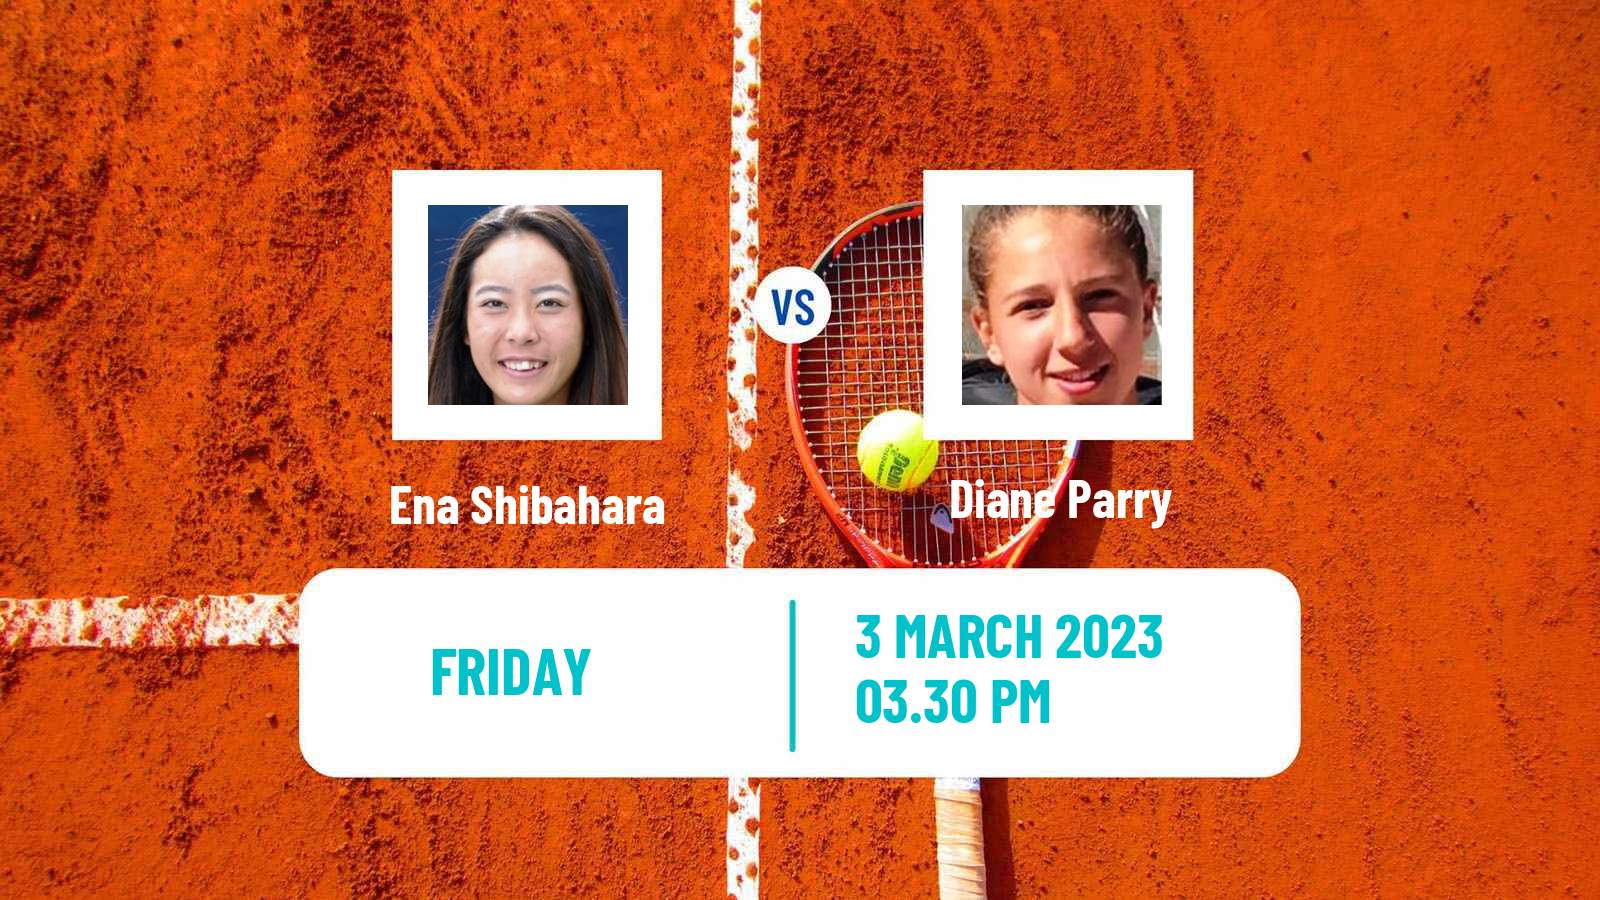 Tennis ITF Tournaments Ena Shibahara - Diane Parry